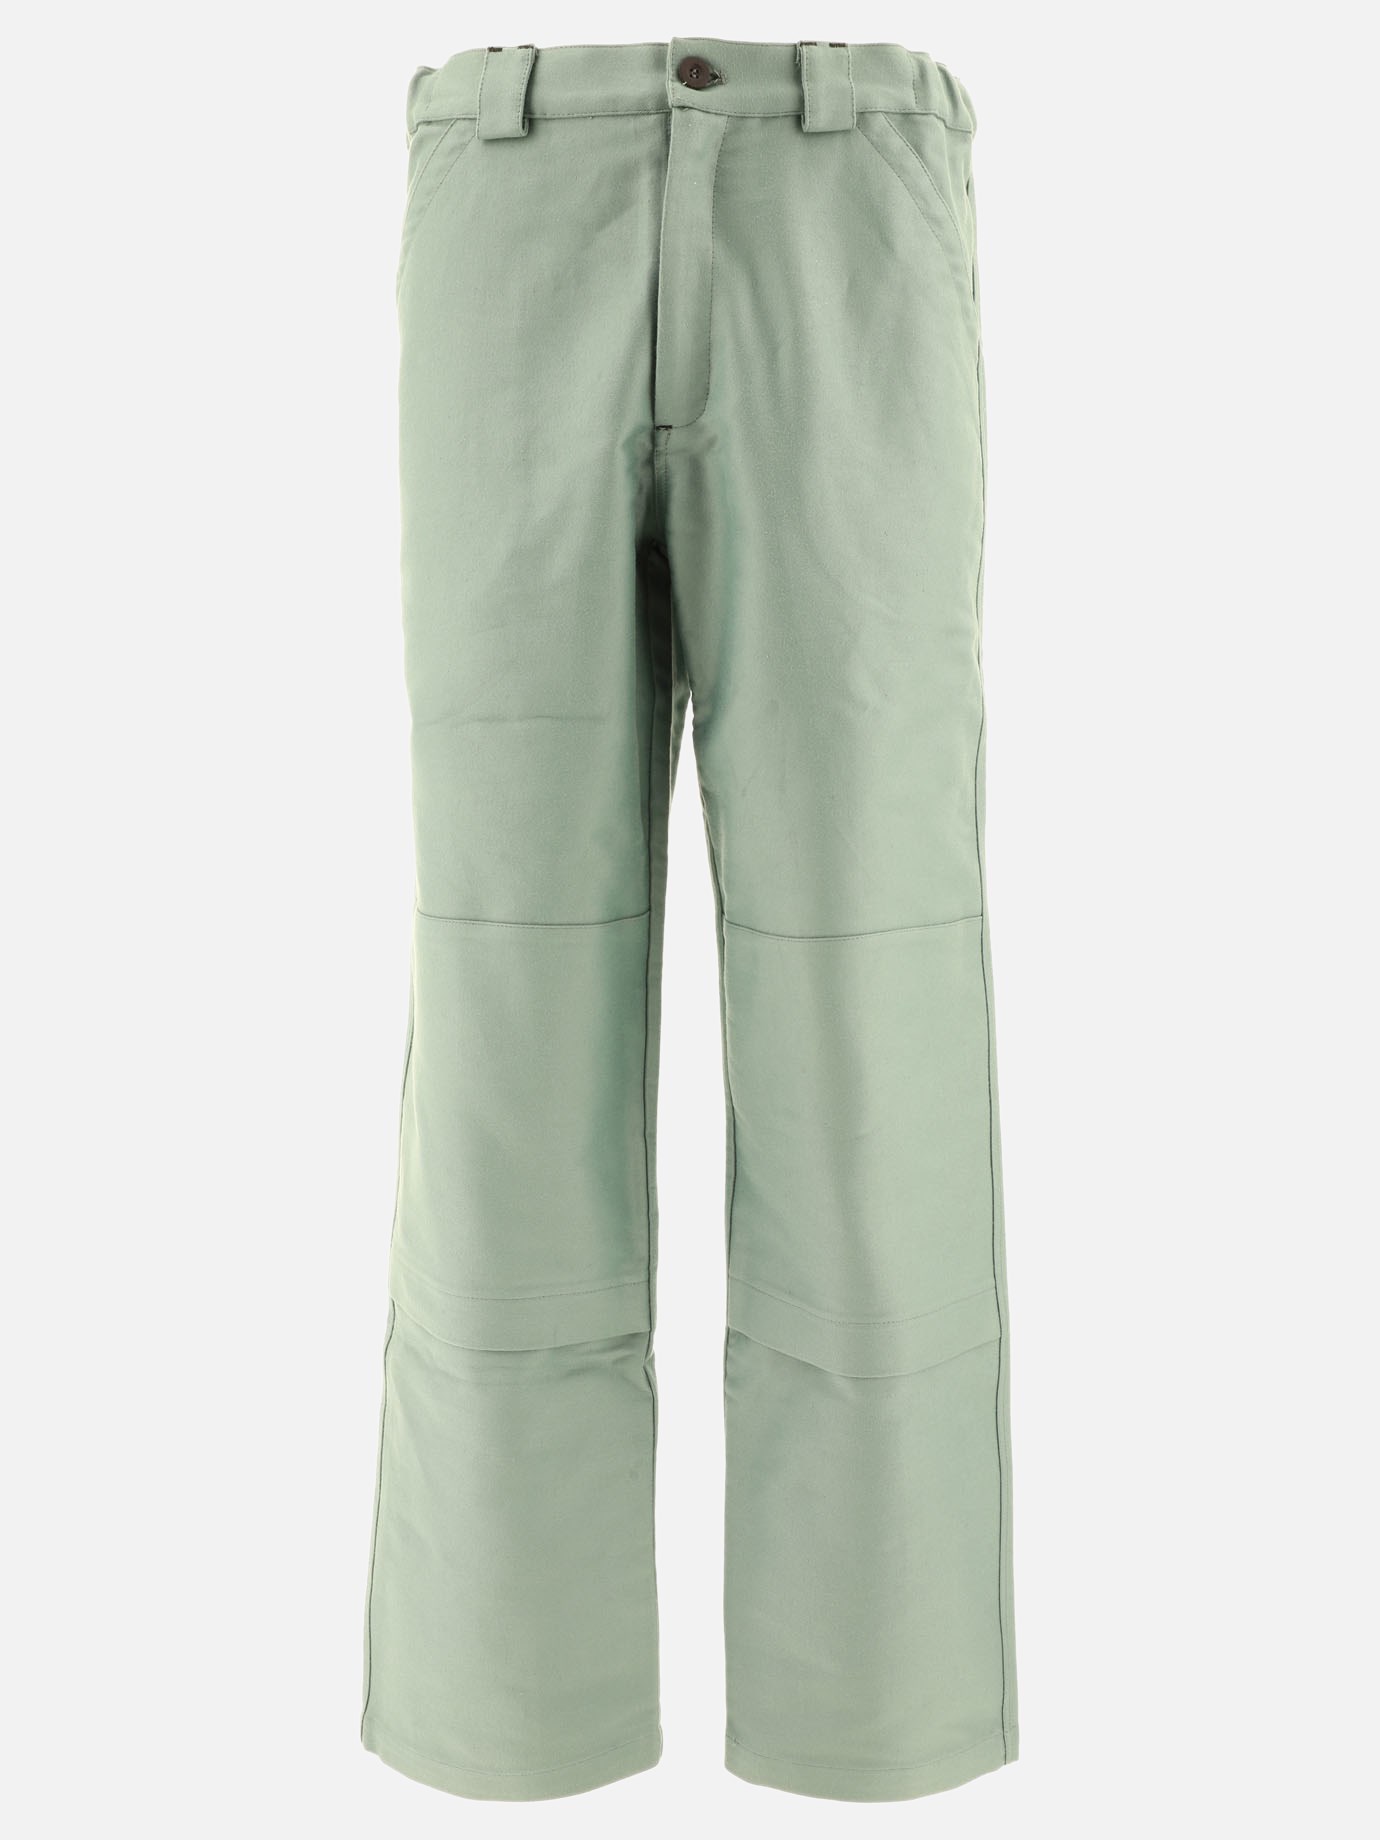 Pantaloni  Replicated Bold Fustian by Gr10K - 5